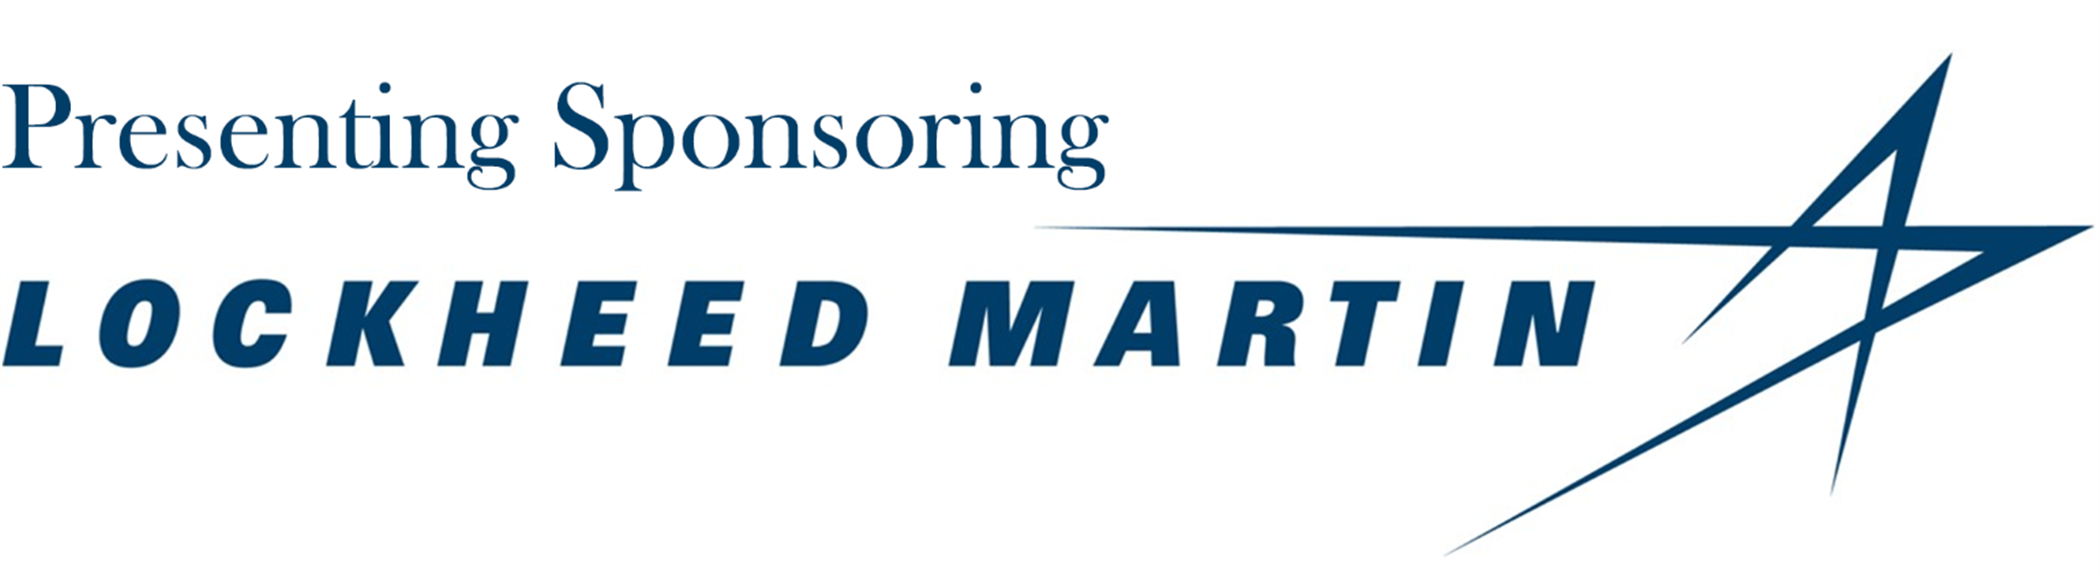 Lockheed Martin Presenting Sponsor Logo